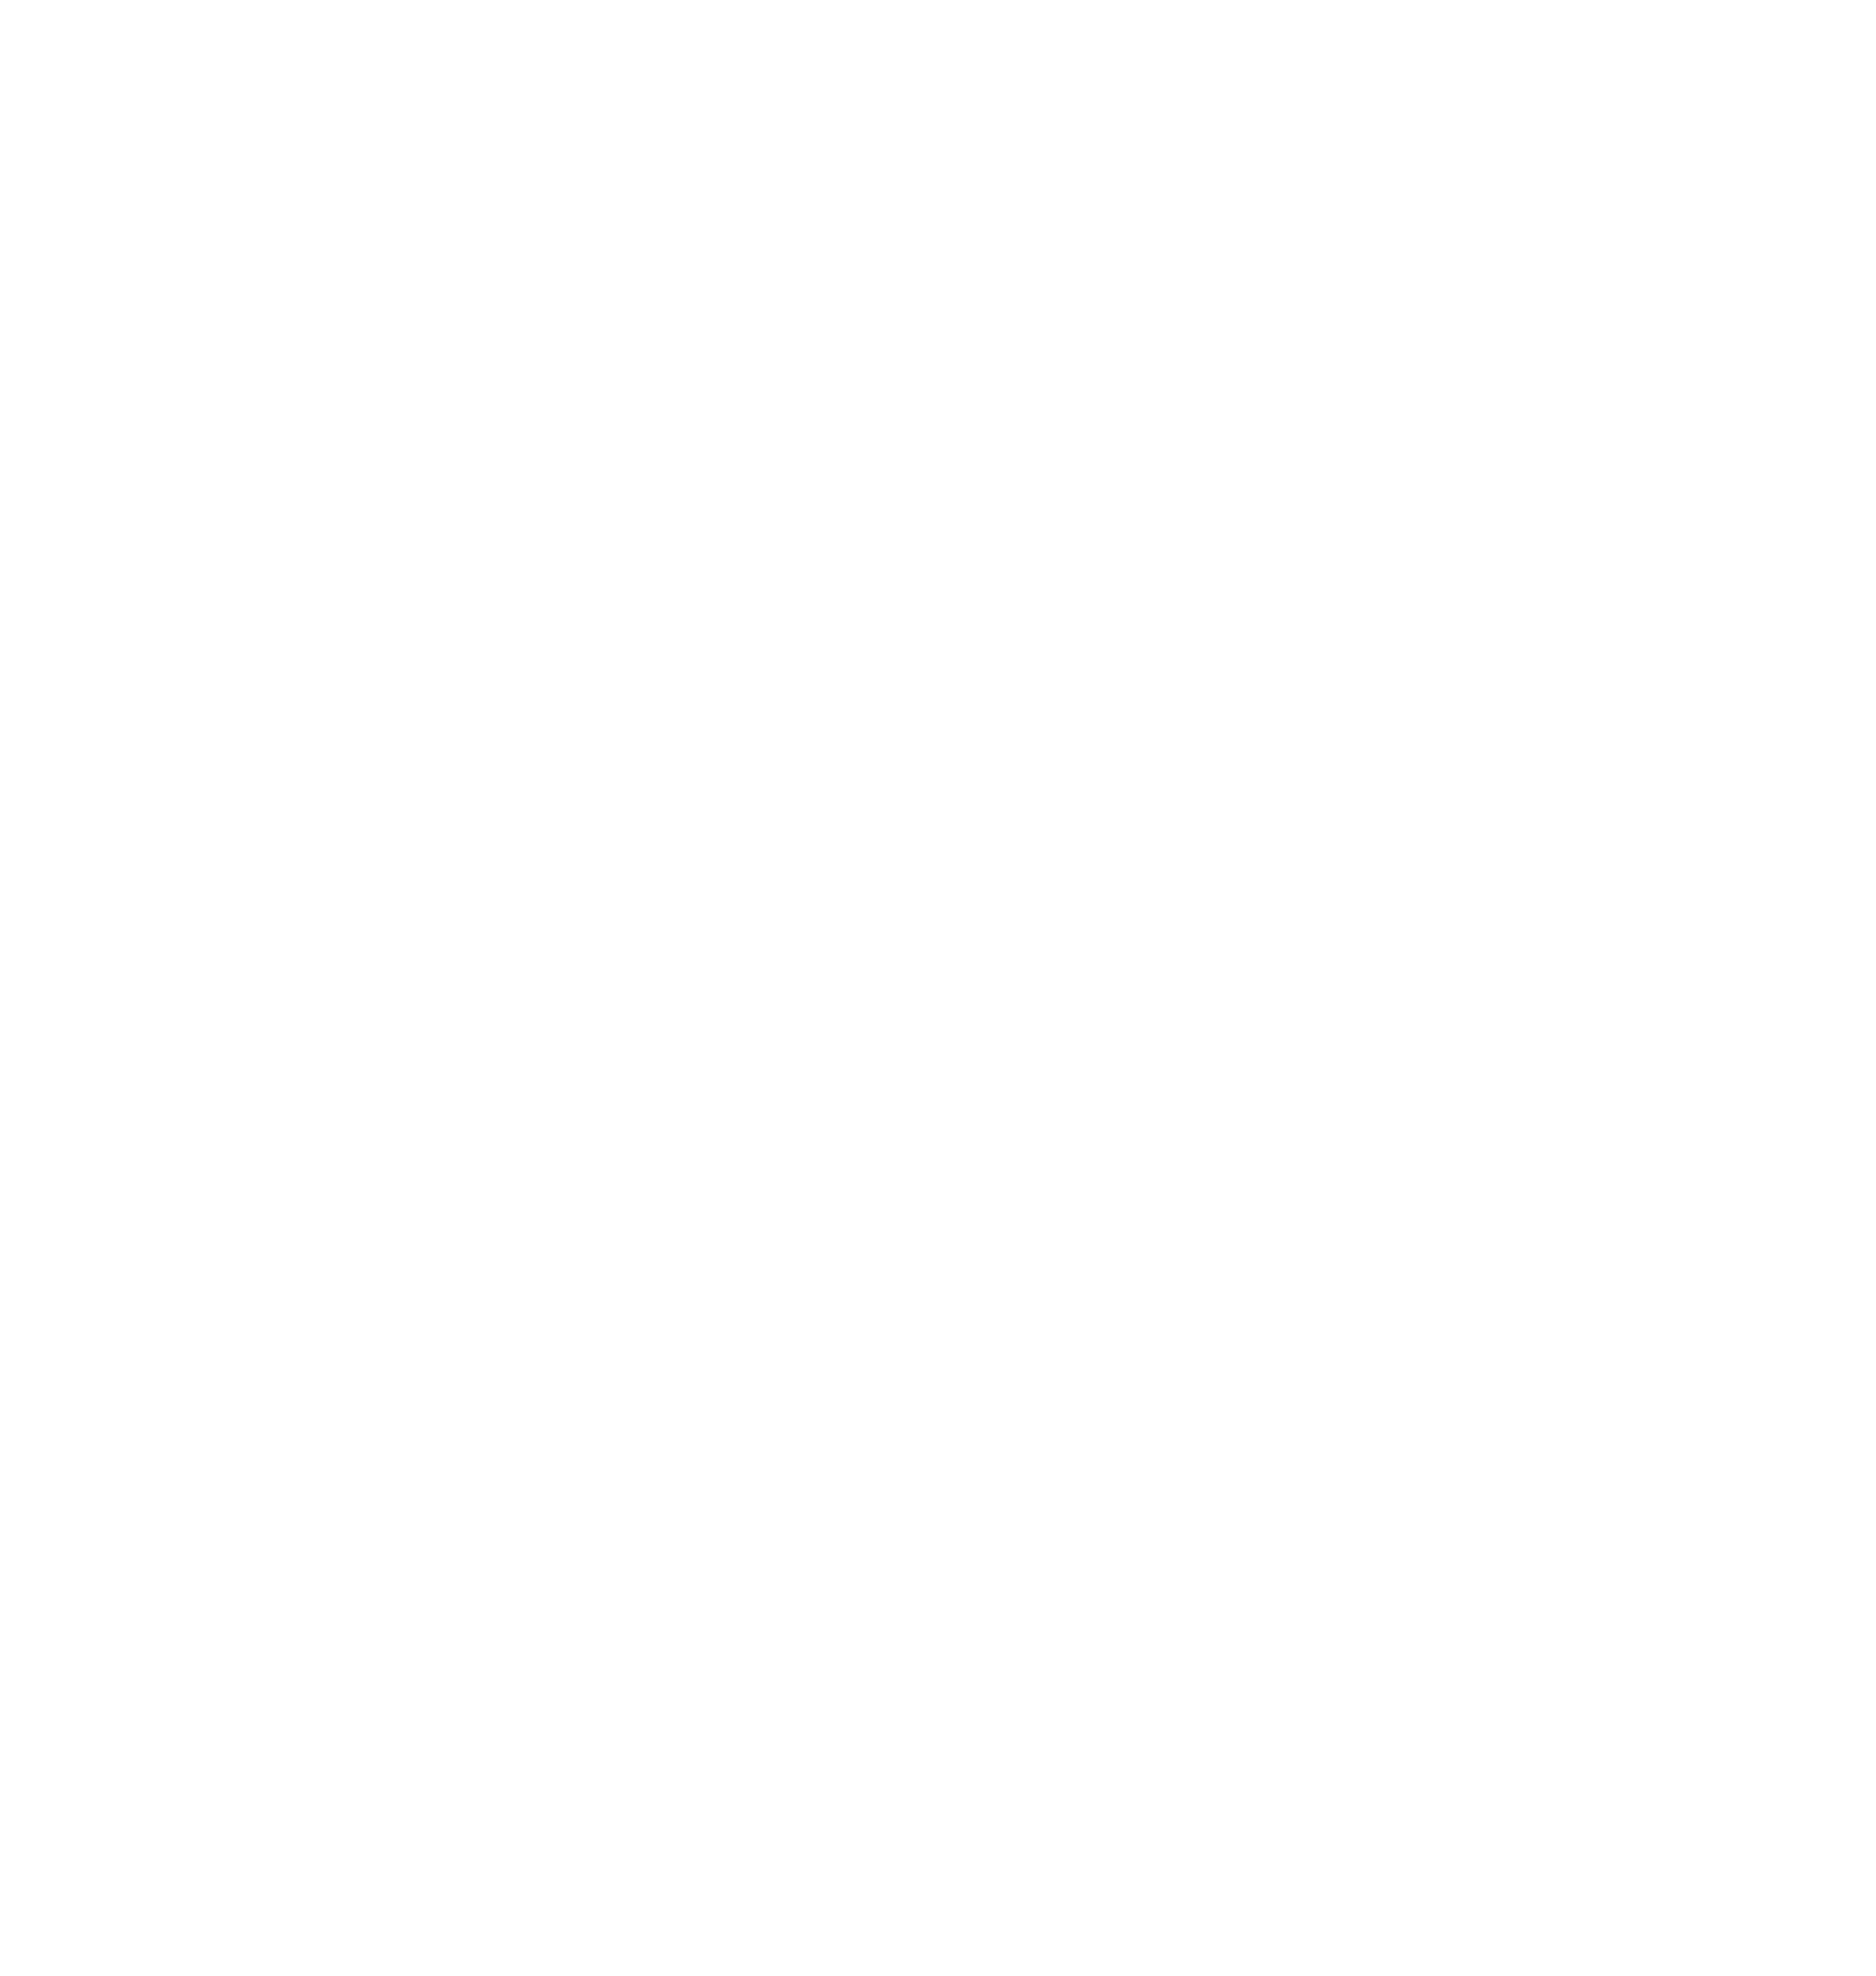 Cooler Master Logo with Slogan at Bottom - White